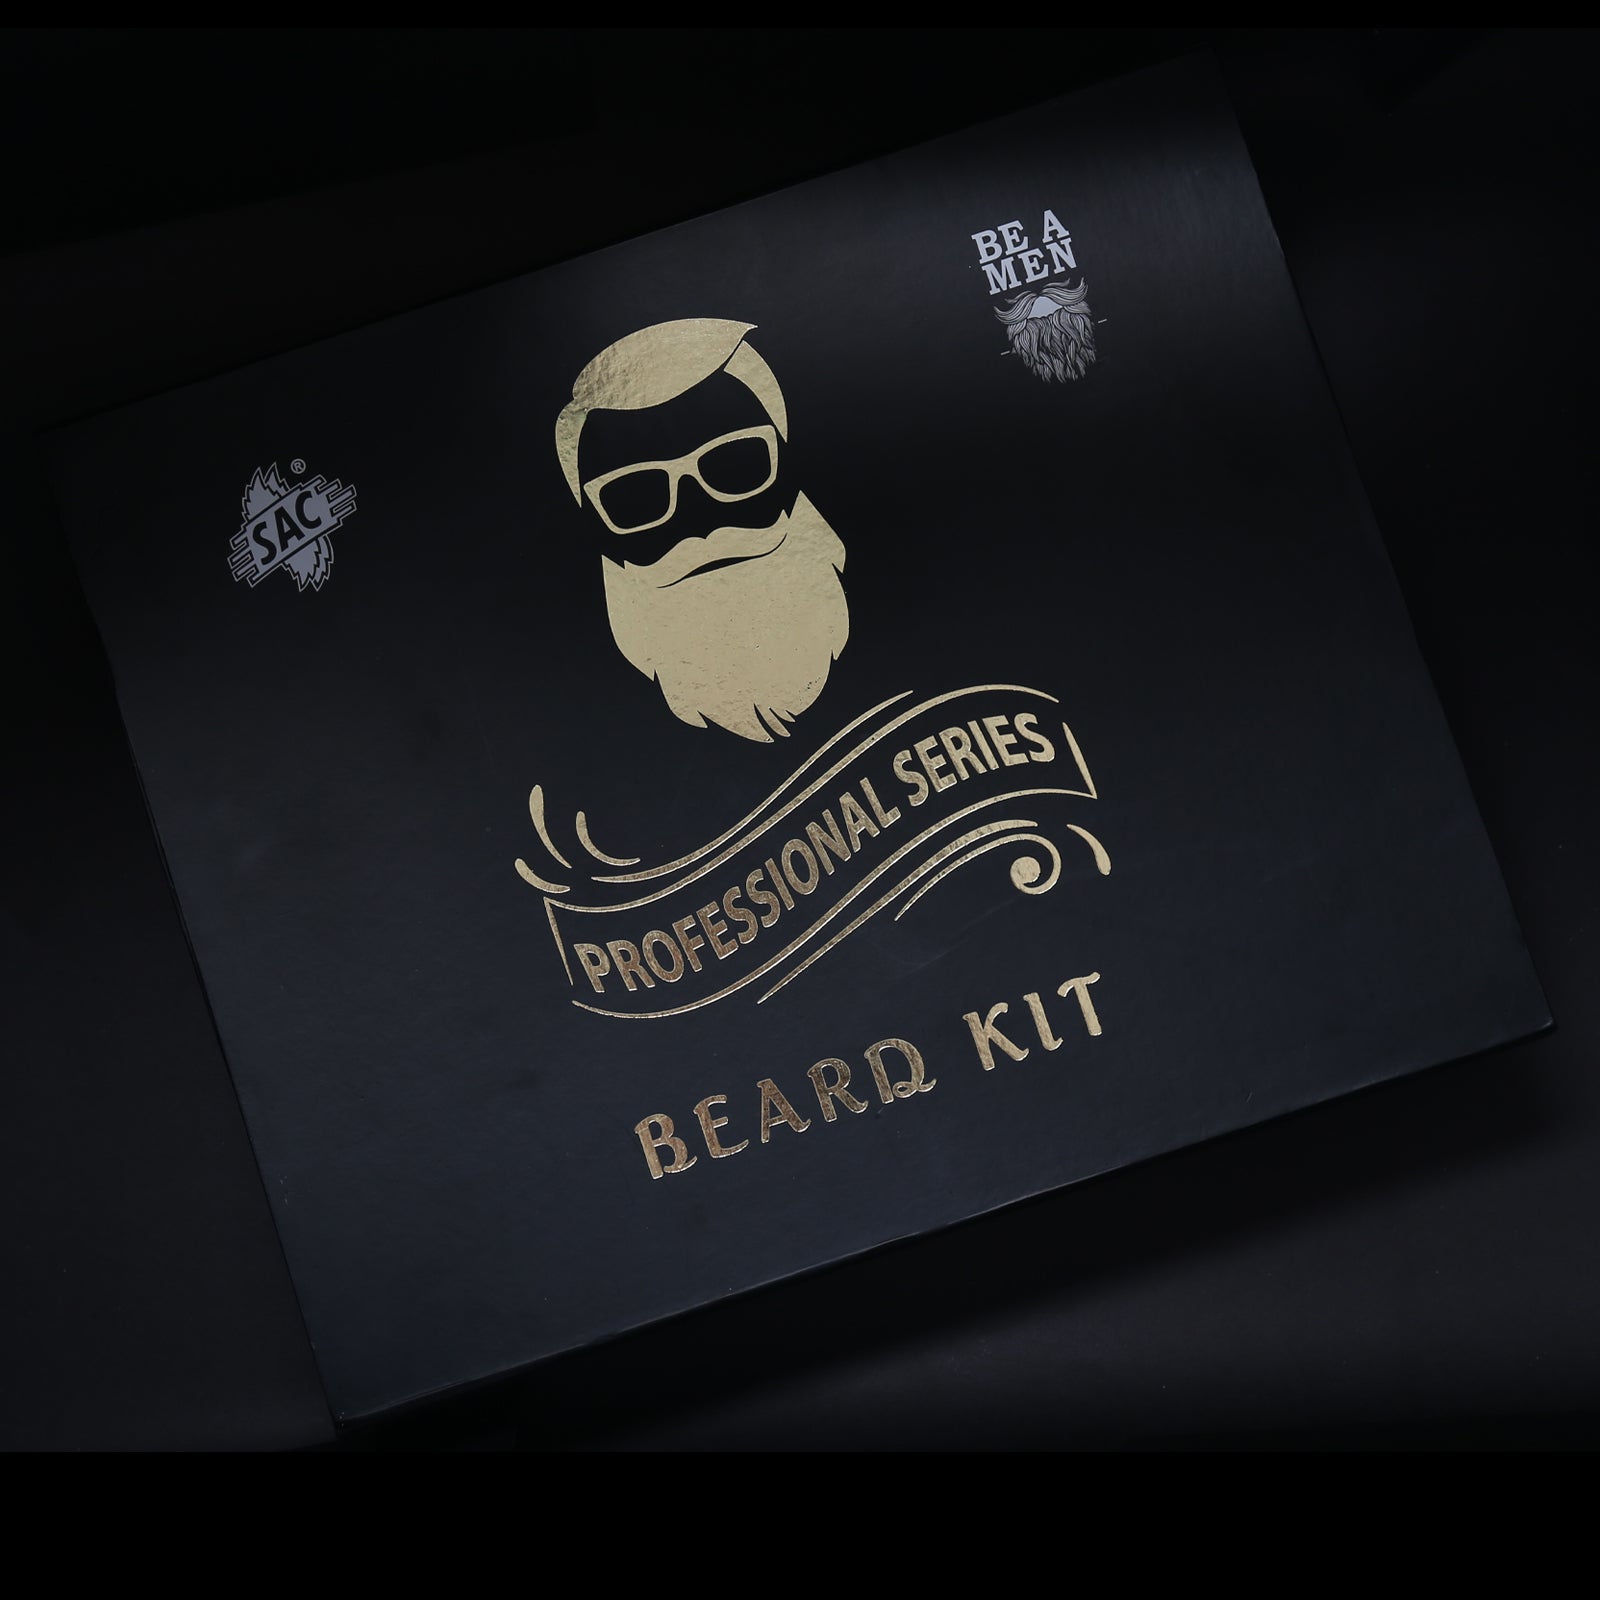 Professional Beard Kit for Grooming, Growth & Maintenance Kit - Professional Beard Oil+Moustache Oil+Beard Serum+Beard Bar+Body Lotion+Face Towel